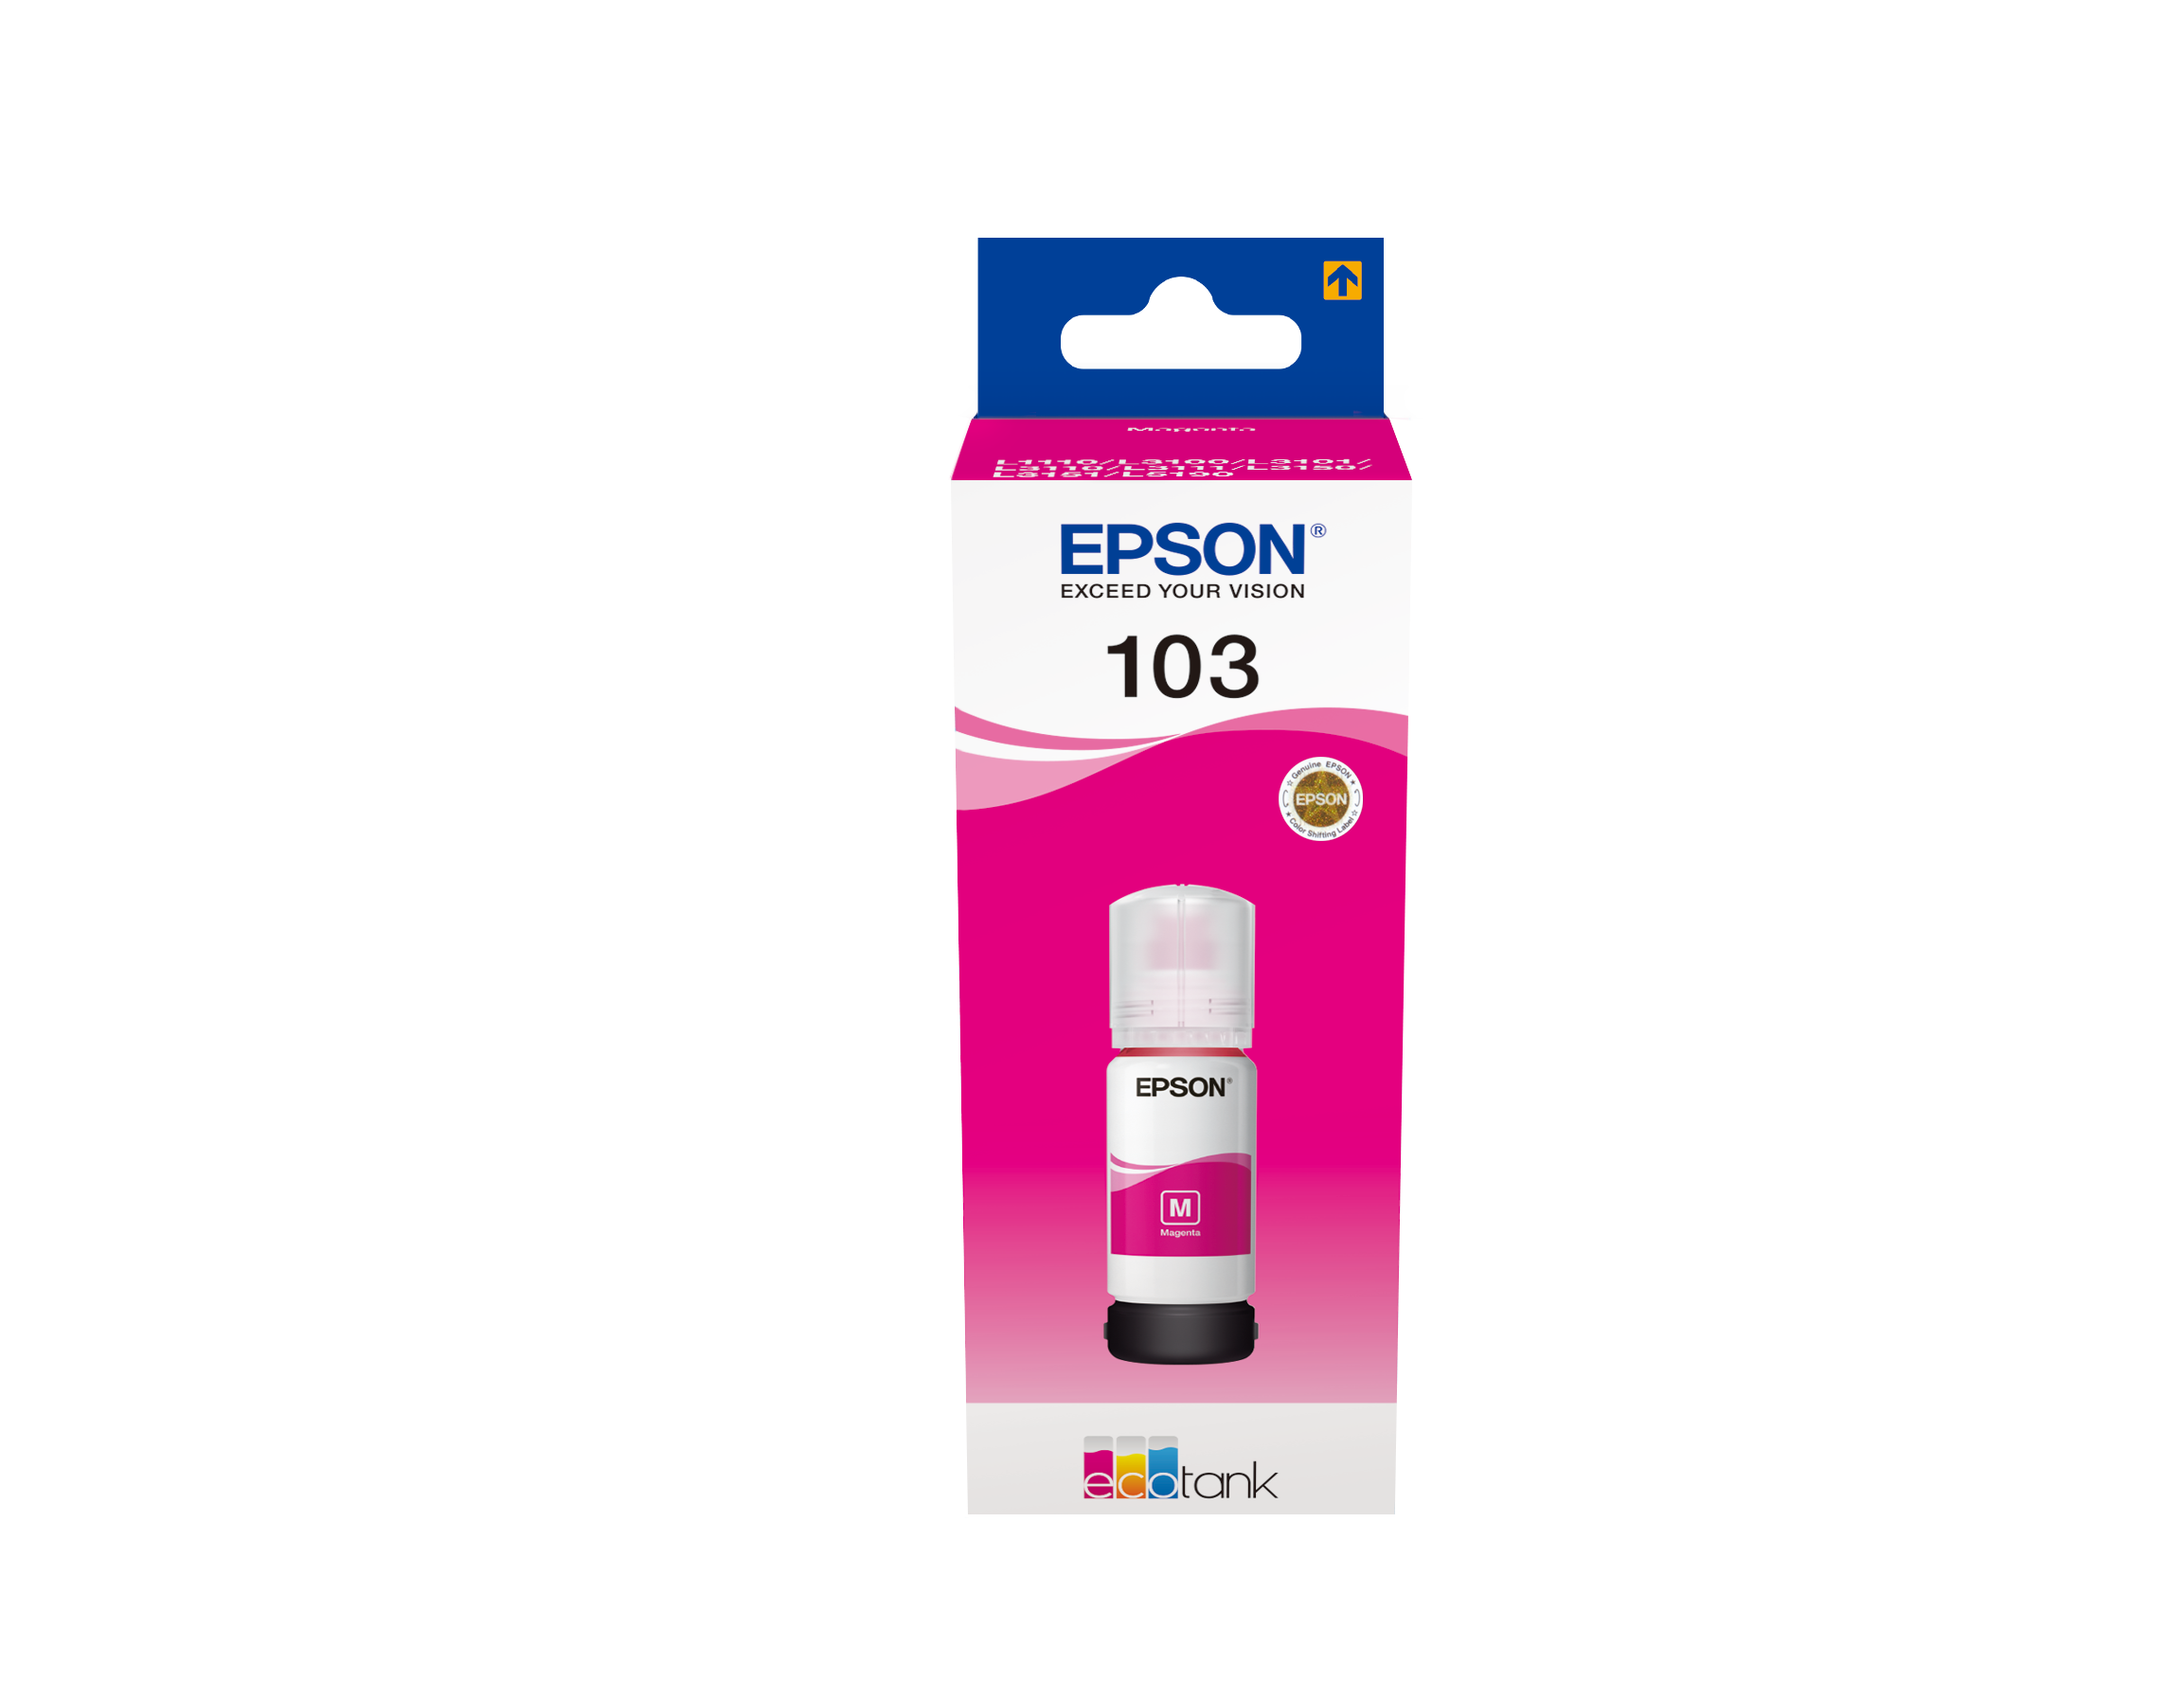 Epson 103 single pack / magenta